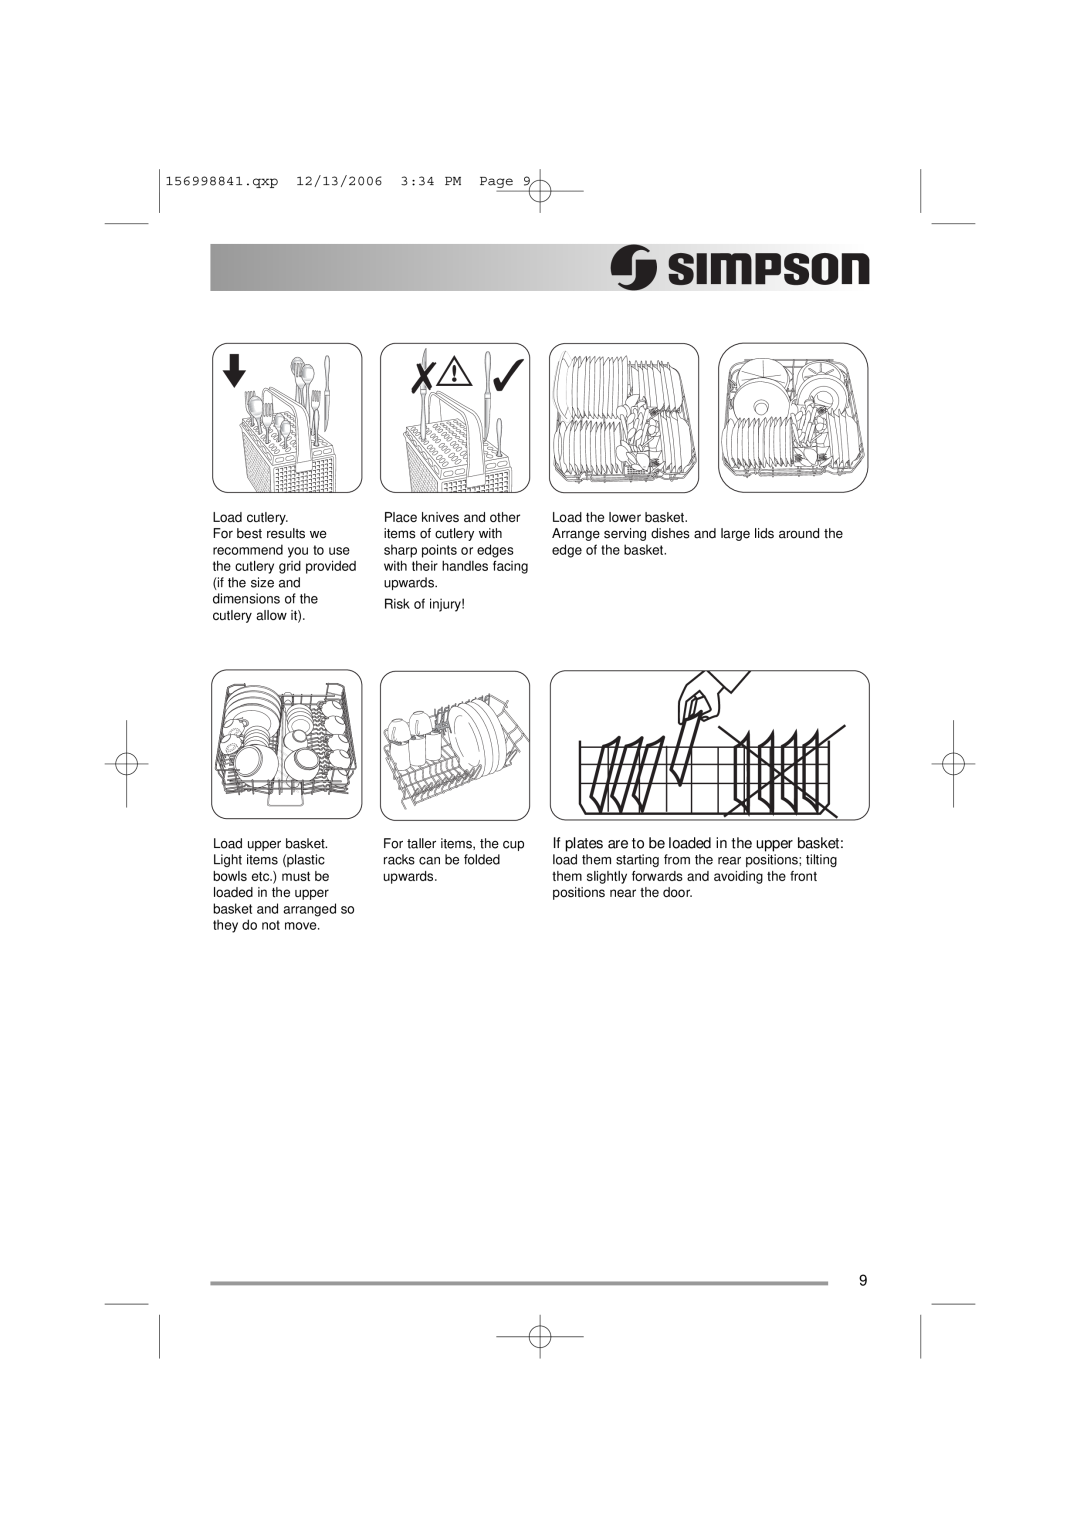 Simpson 52C850 user manual Load cutlery 